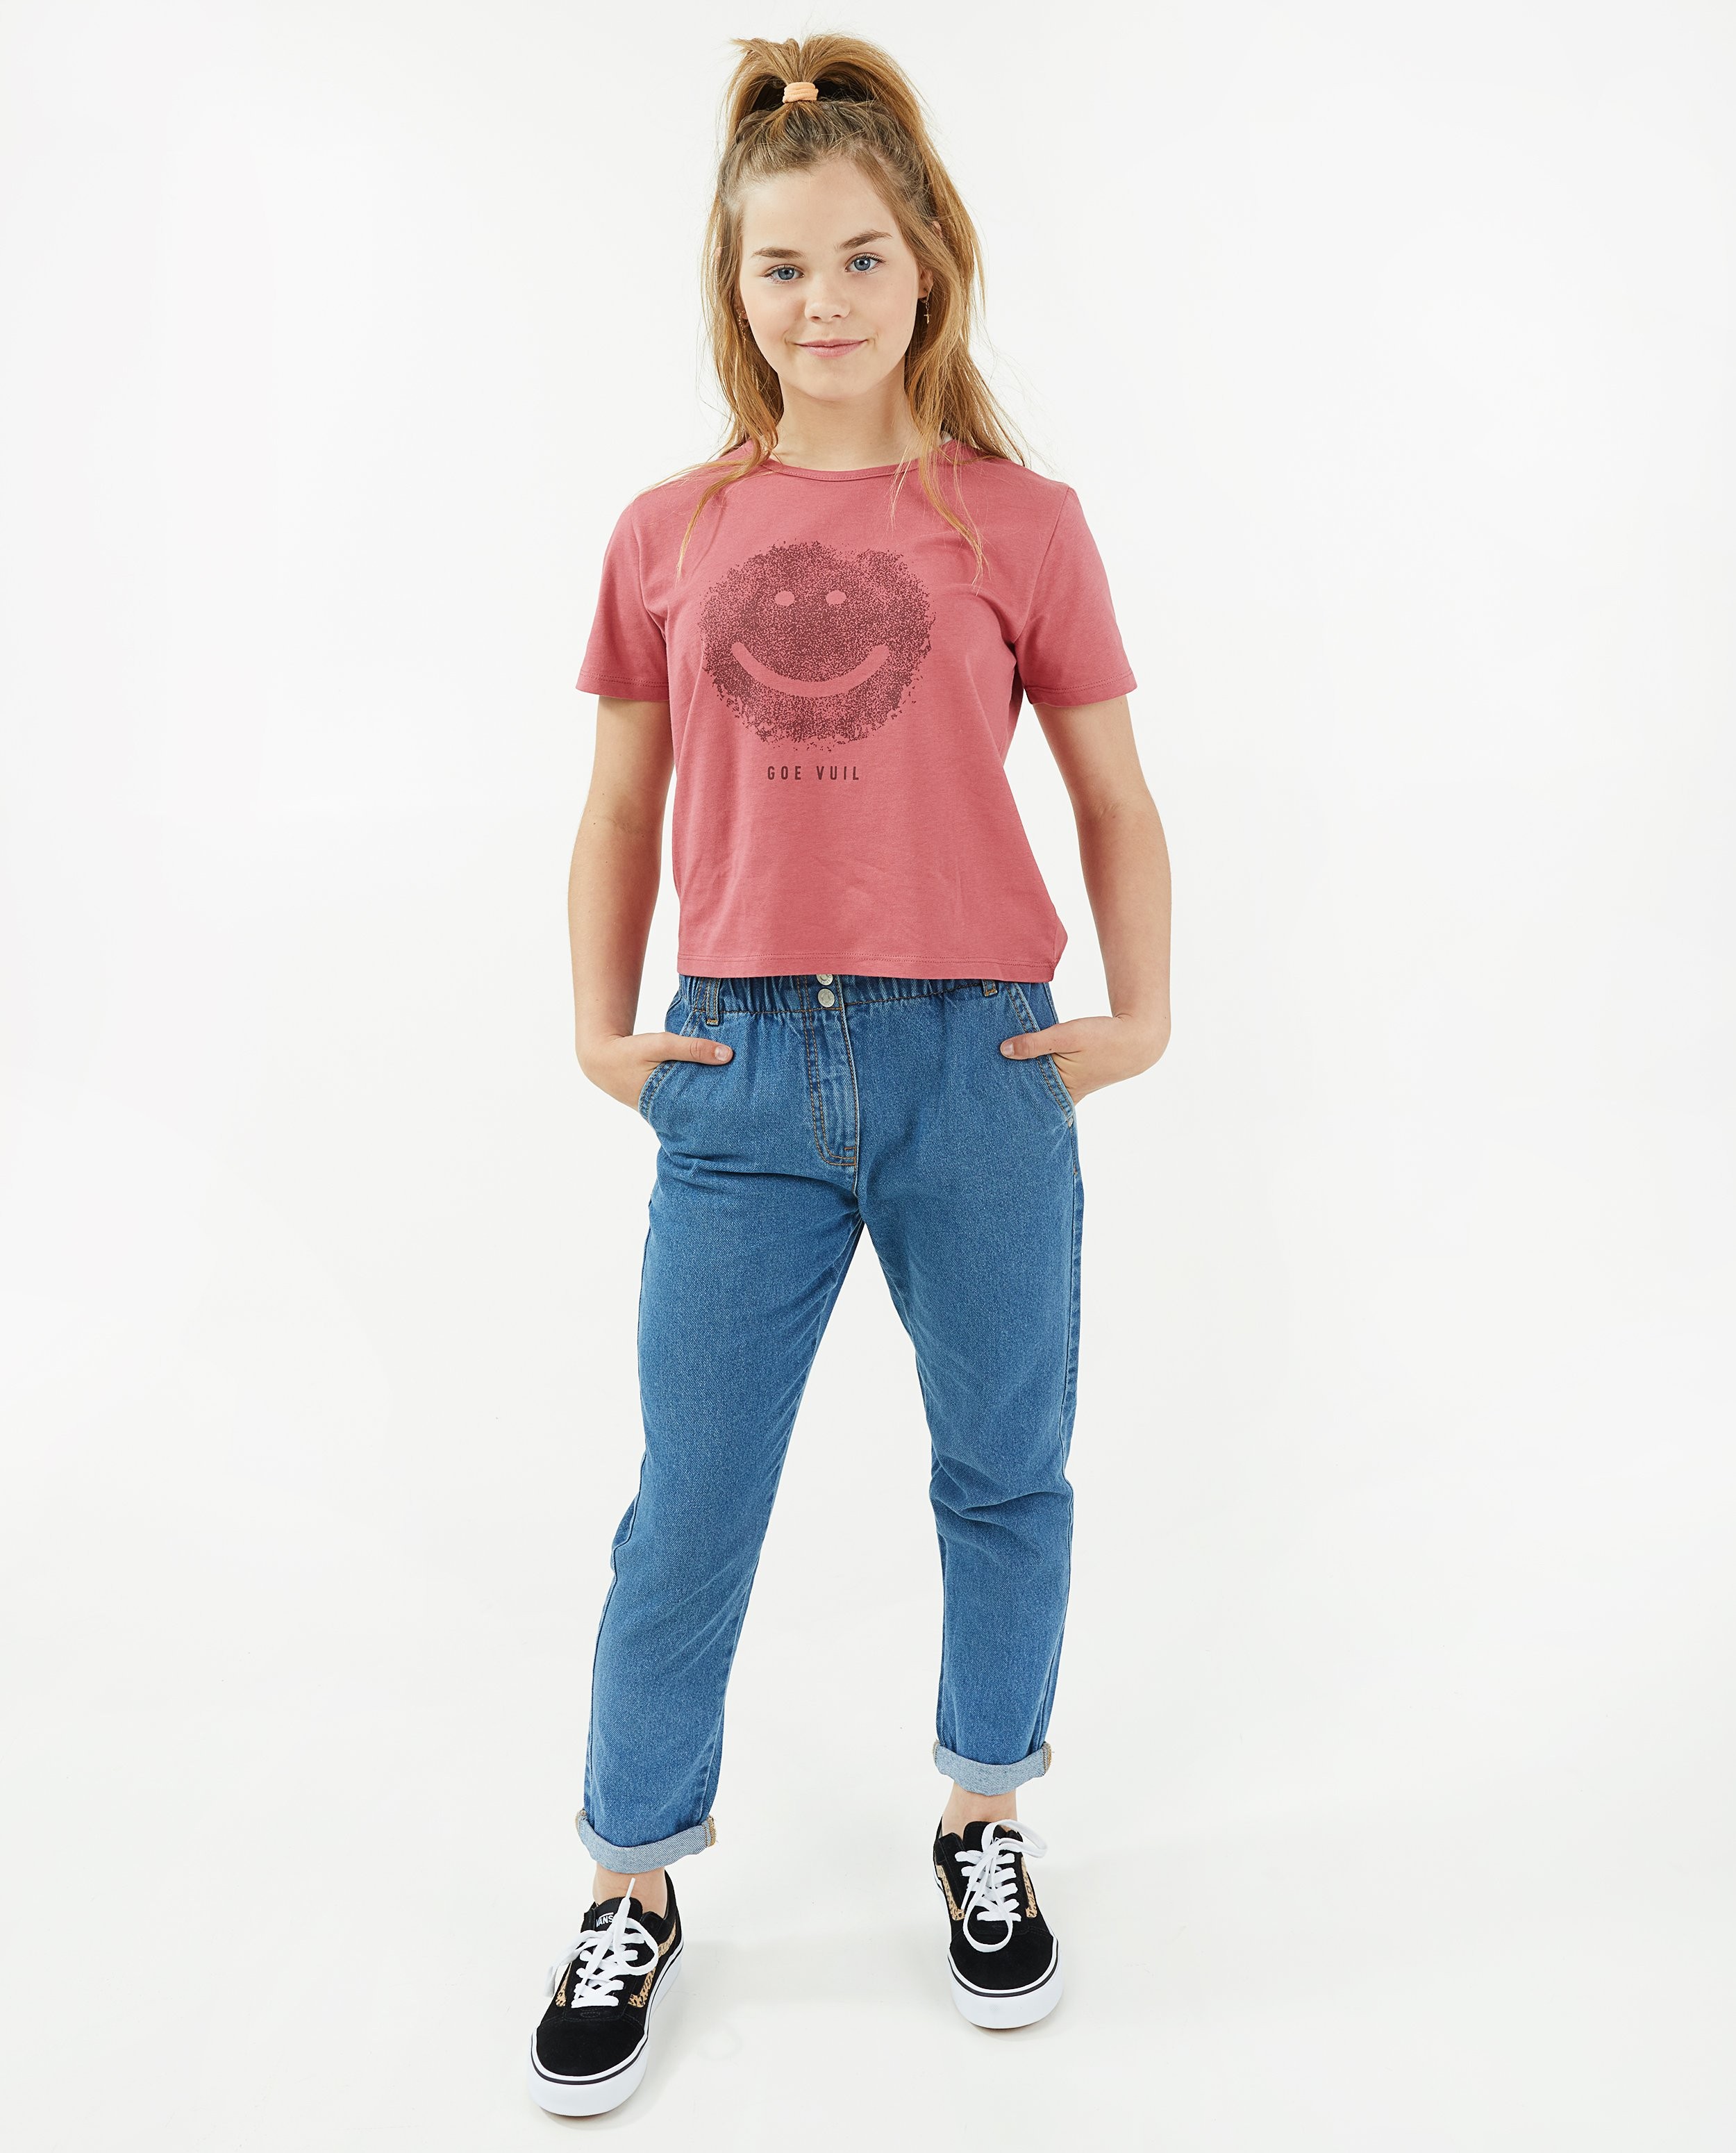 T-shirt rose pâle Goe Gespeeld - null - Besties